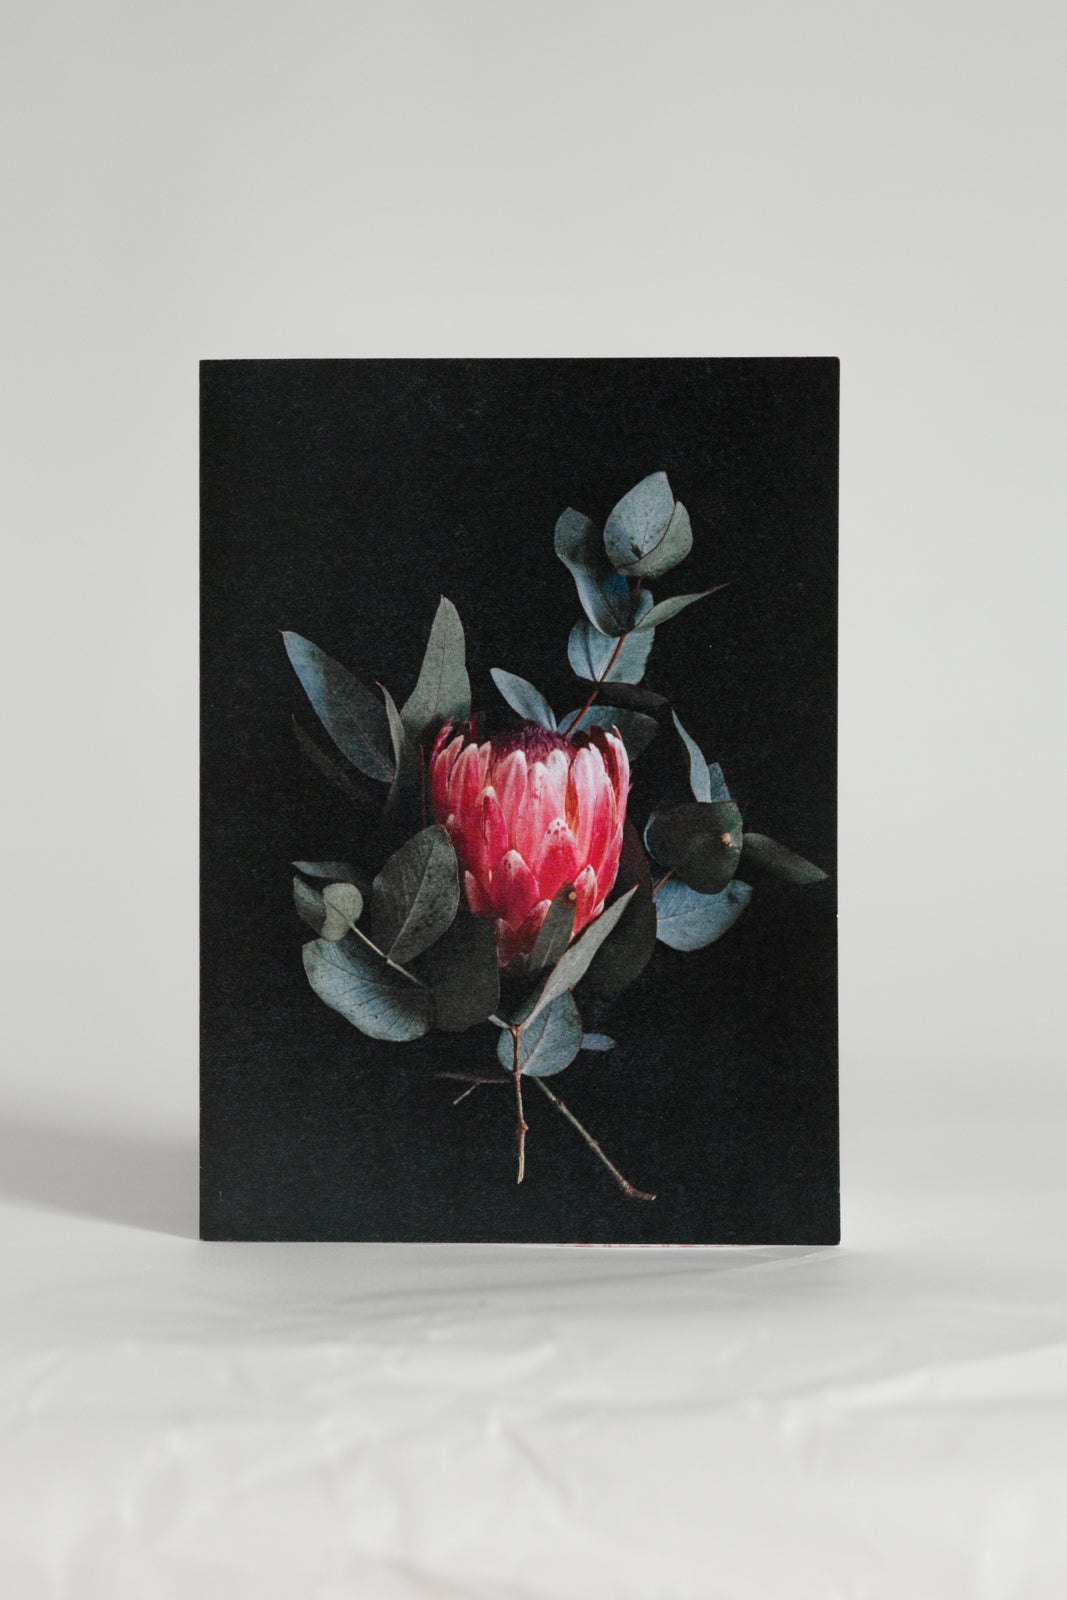 Protea Greeting Card